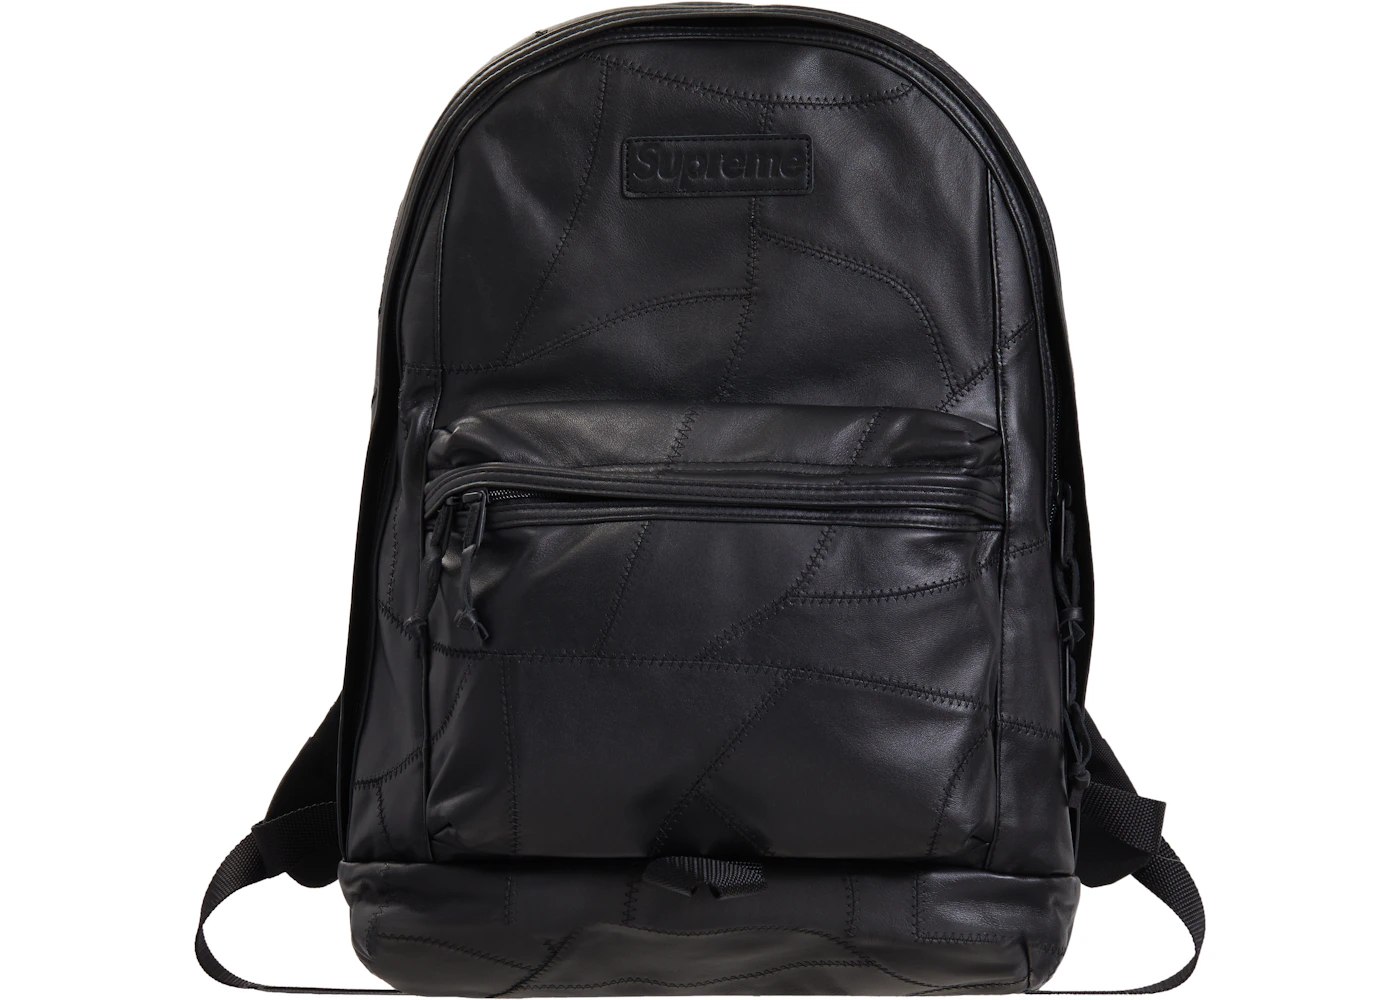 leather supreme bape backpack